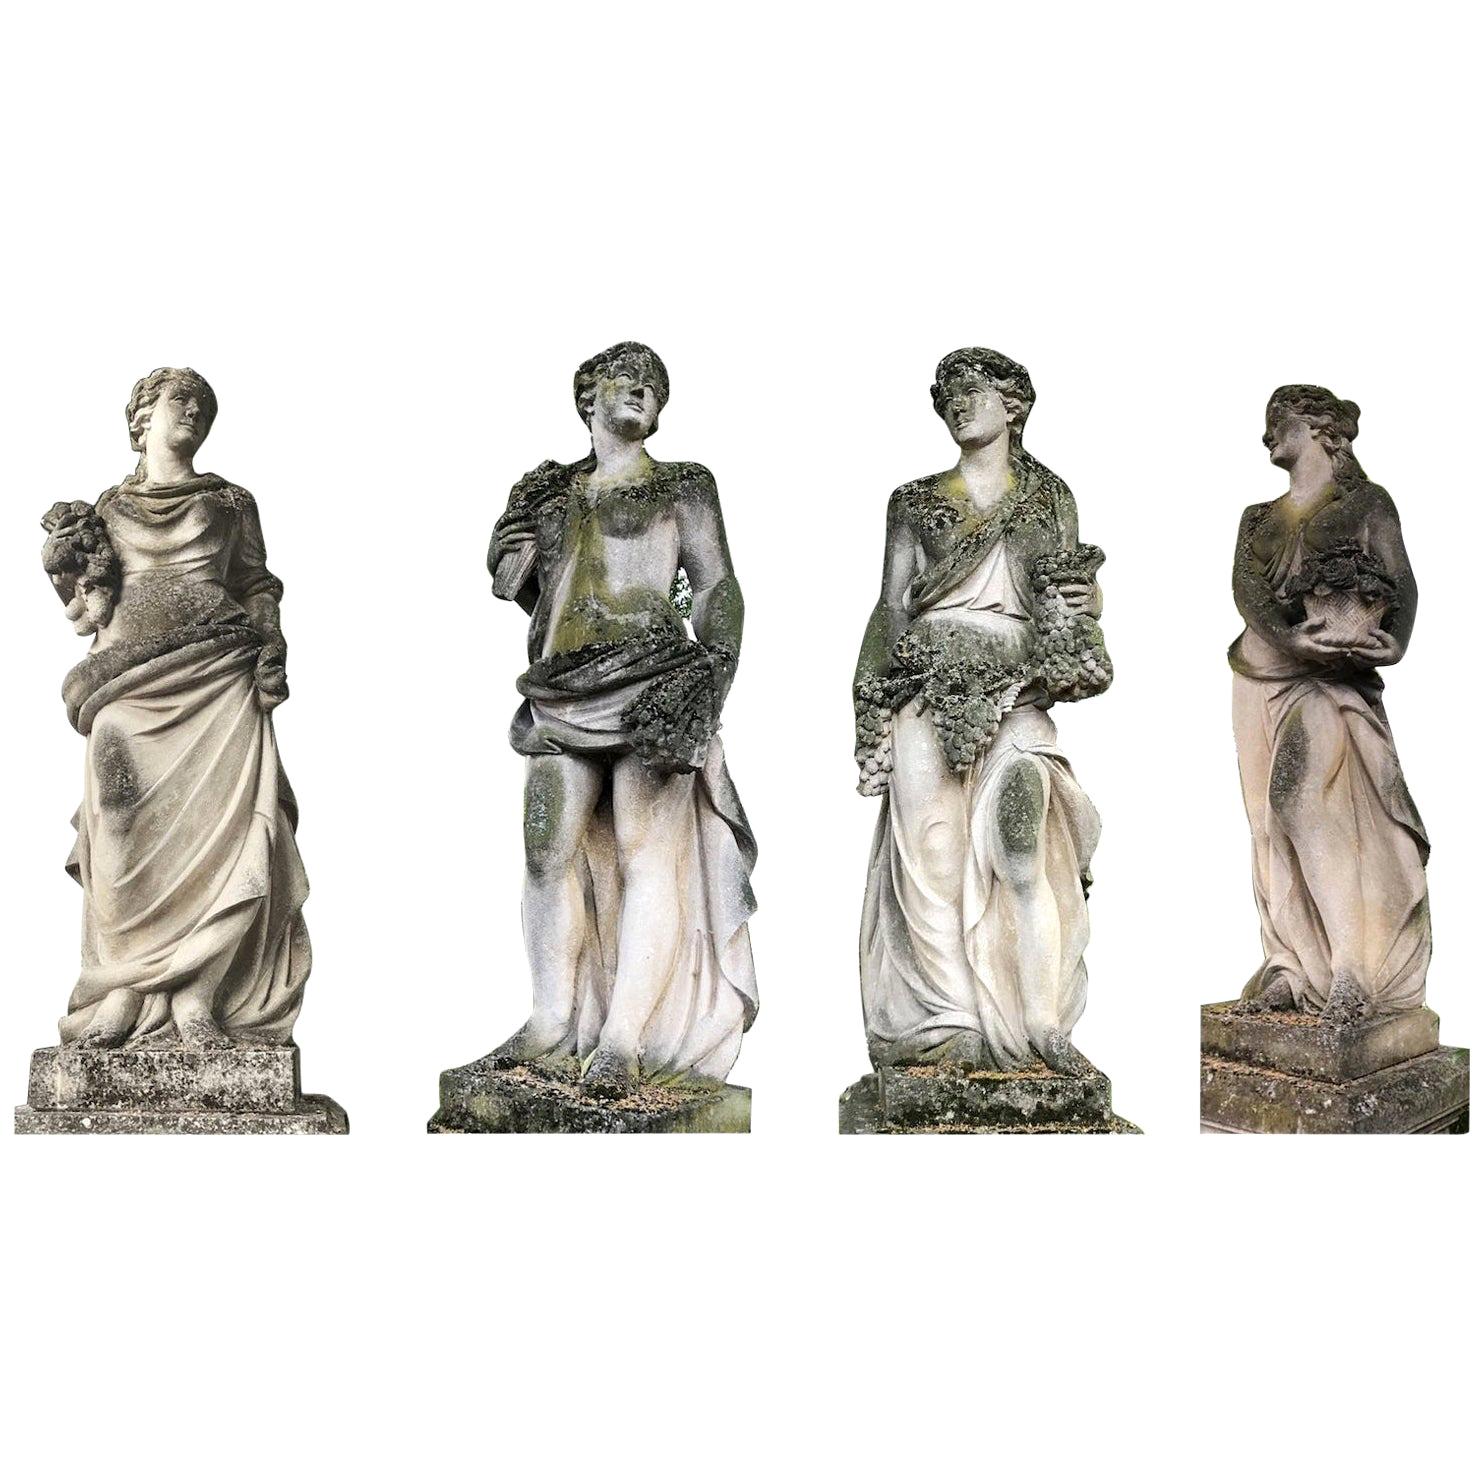 Extraordinary Set of Italian Stone Statues Representing the Four Seasons